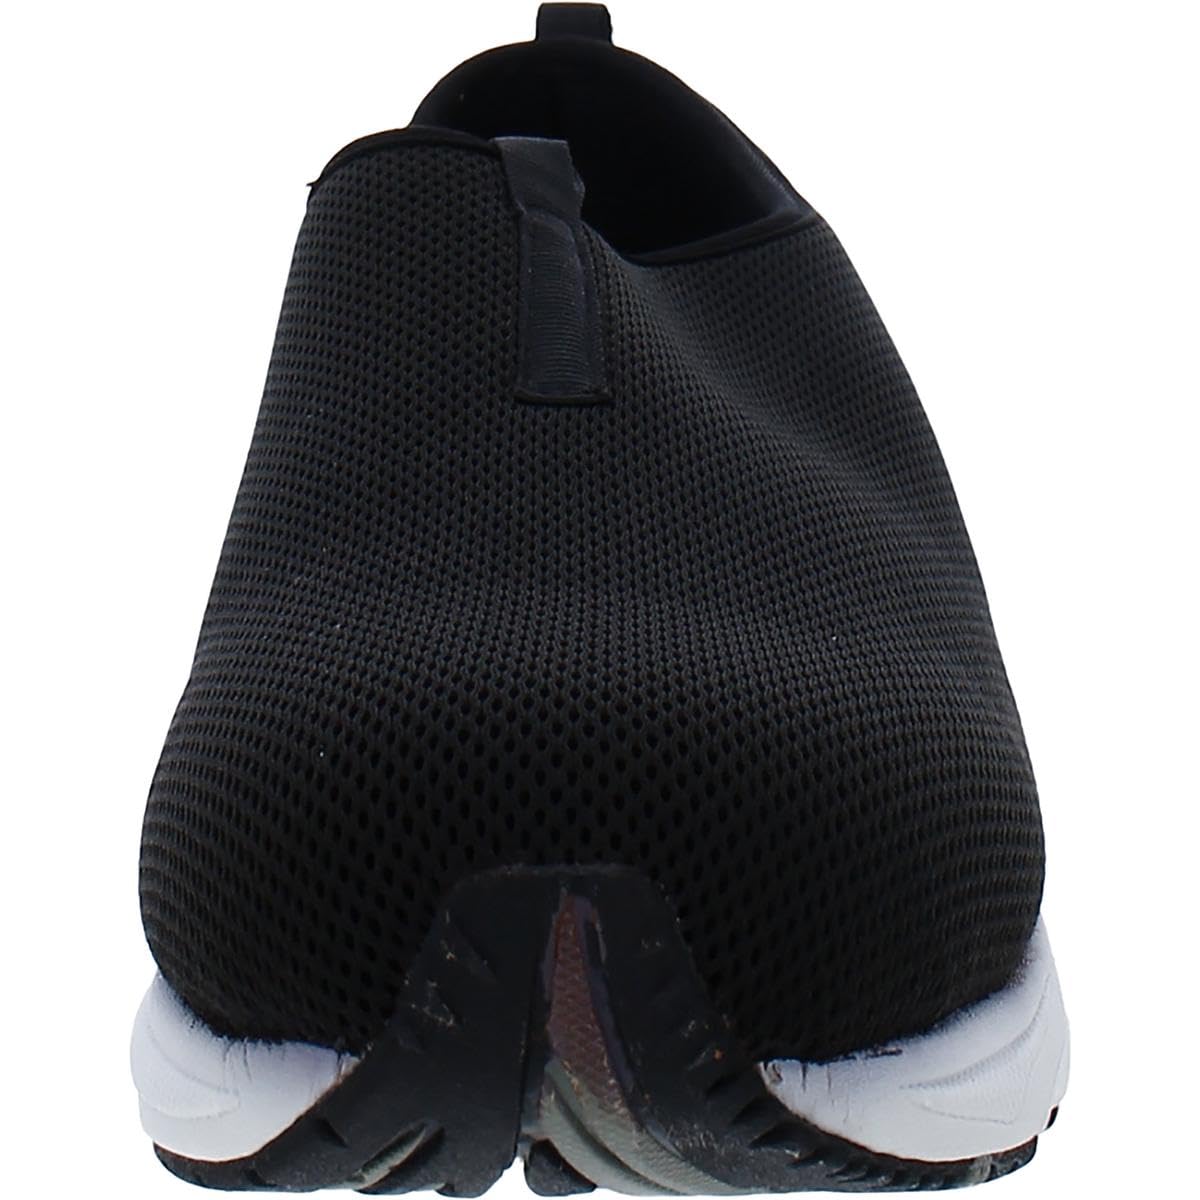 Drew Women's Blast Athletic Shoe,Black Sport Mesh,US 6 W